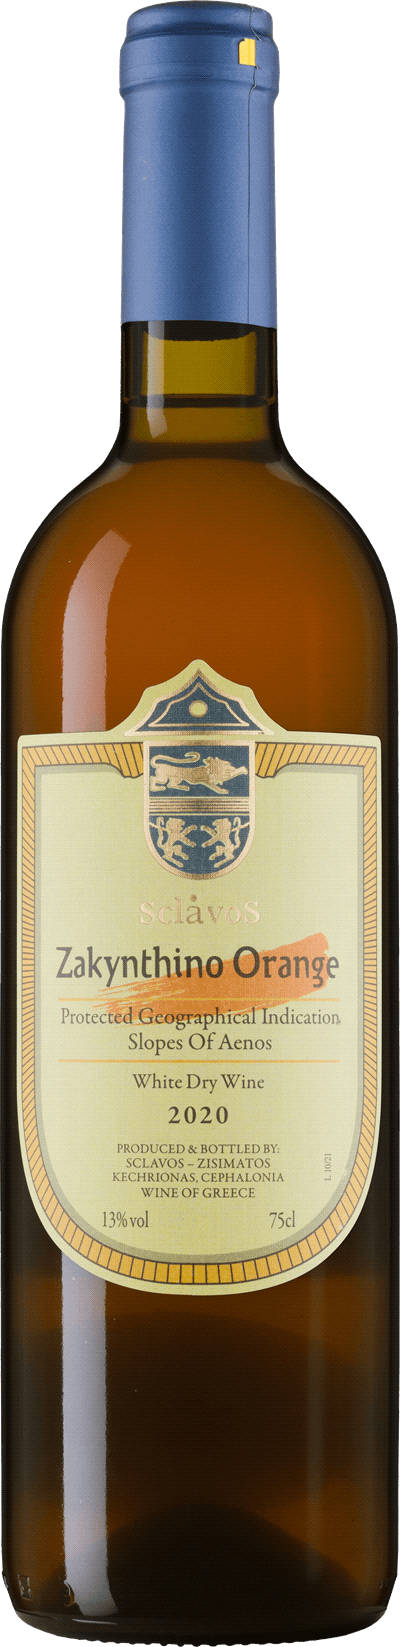 Zakynthino Orange 